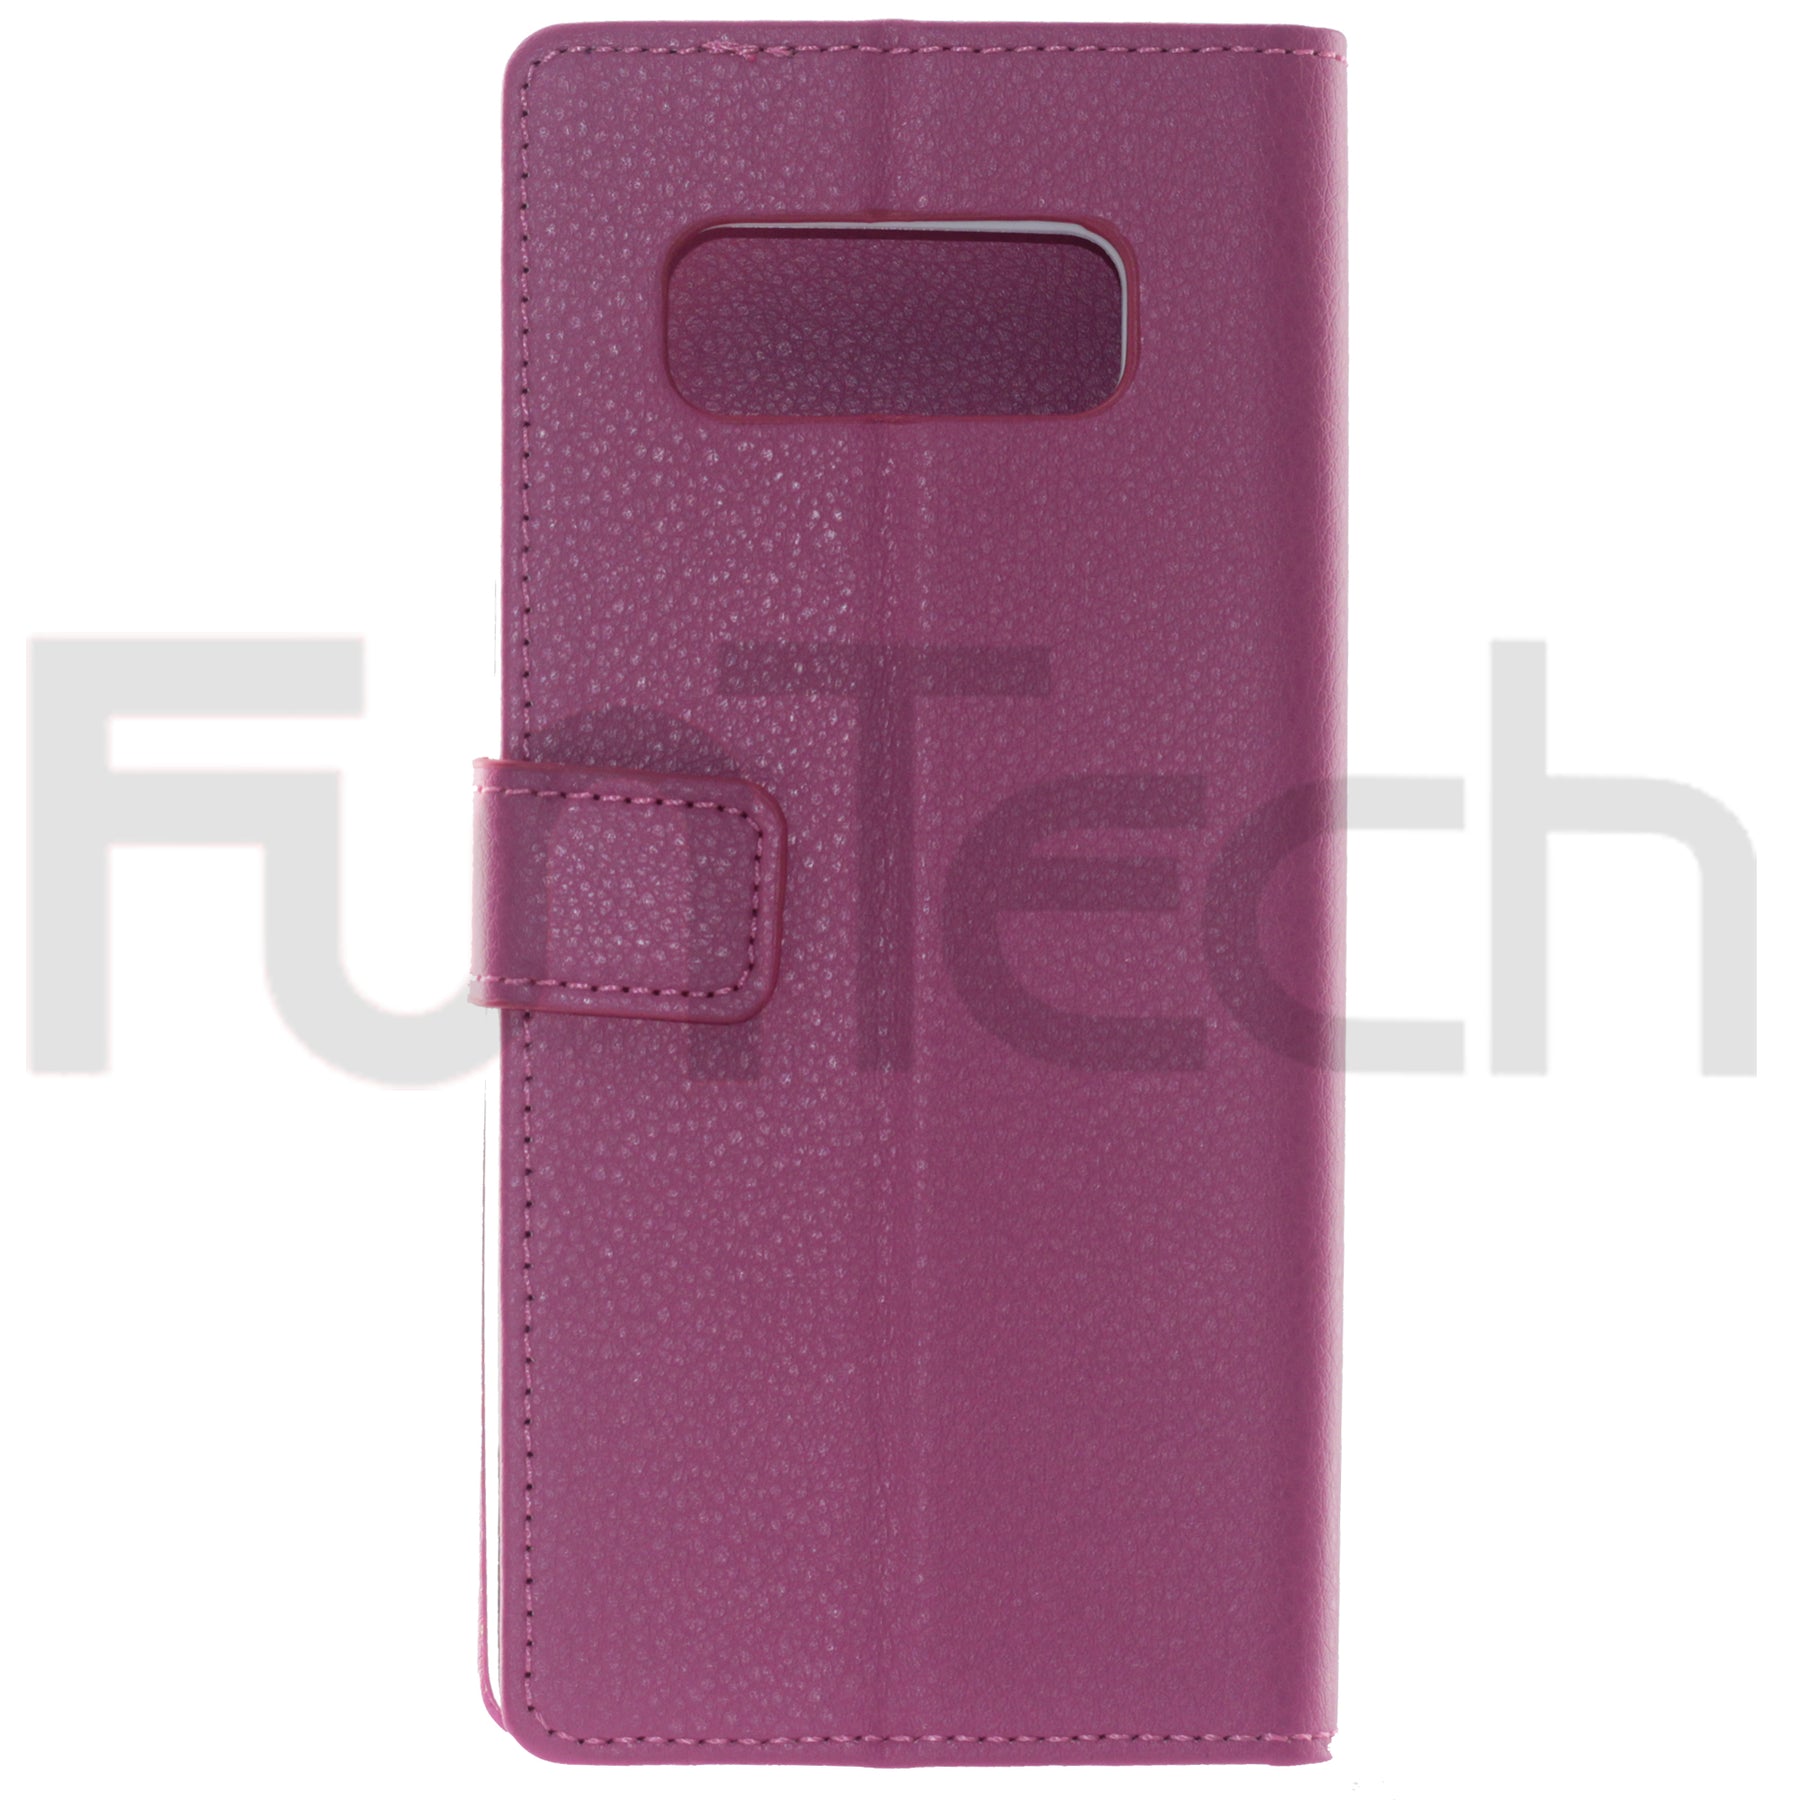 Samsung Note 8, Leather Wallet Case, Color Pink.